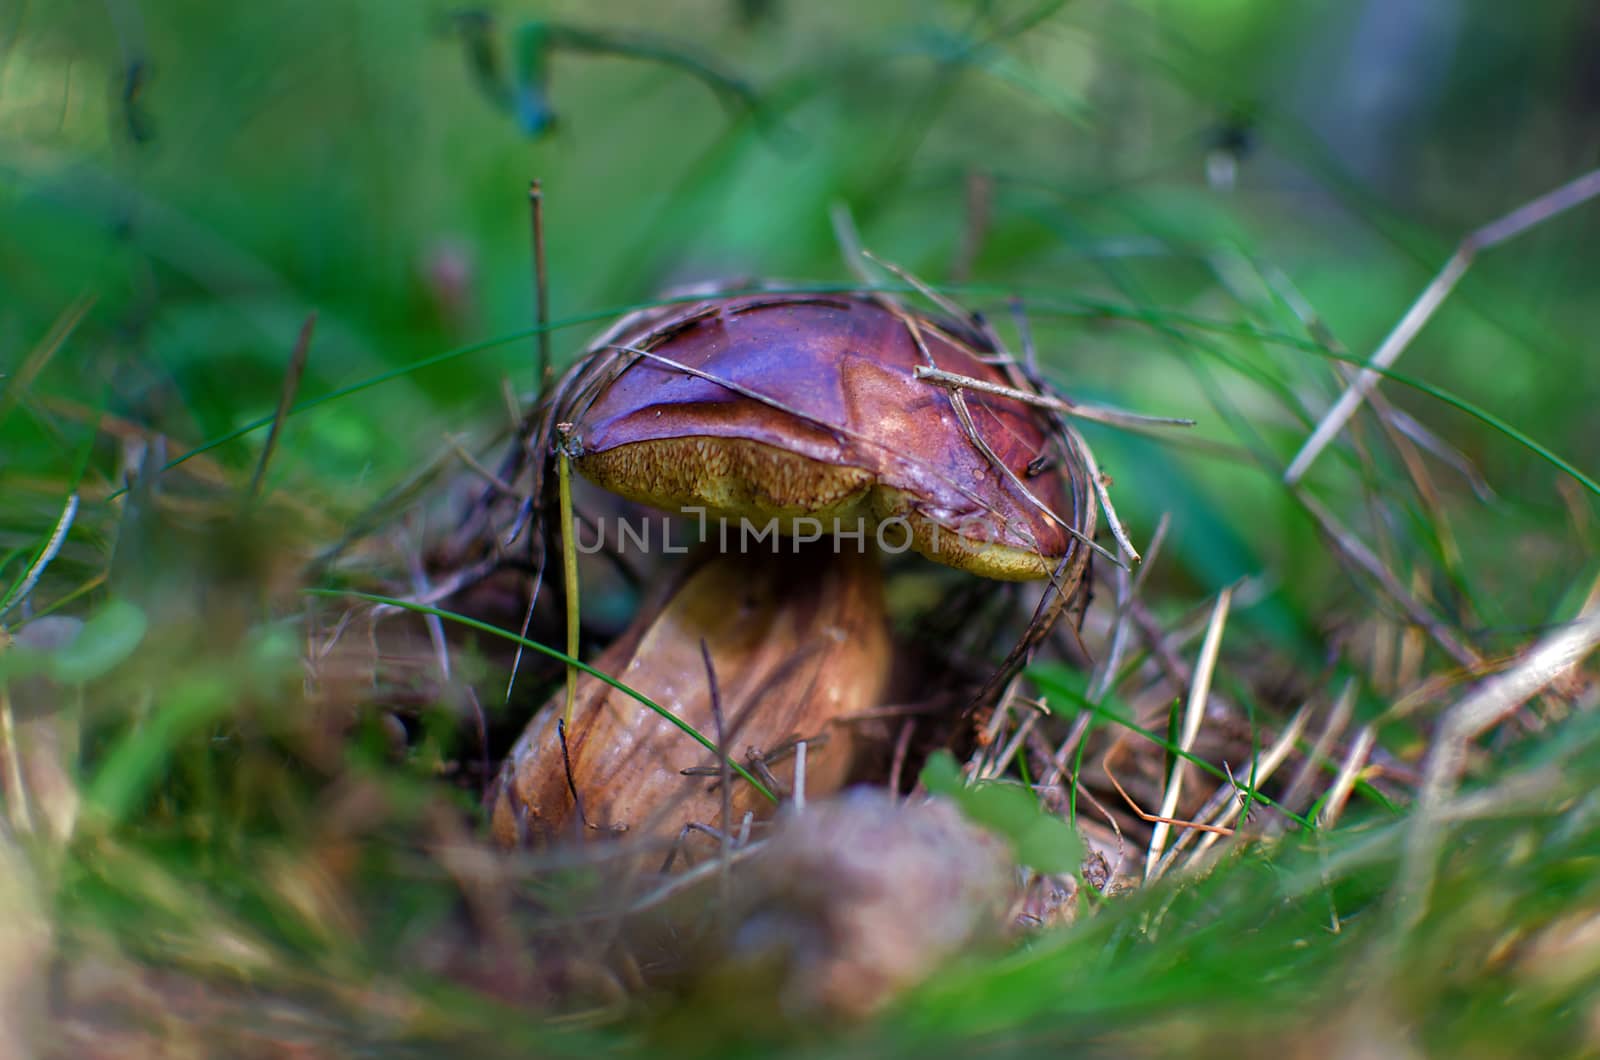 Mushroom boletus edulis. Edible orange cap mushroom growing in green moss. by KajaNi